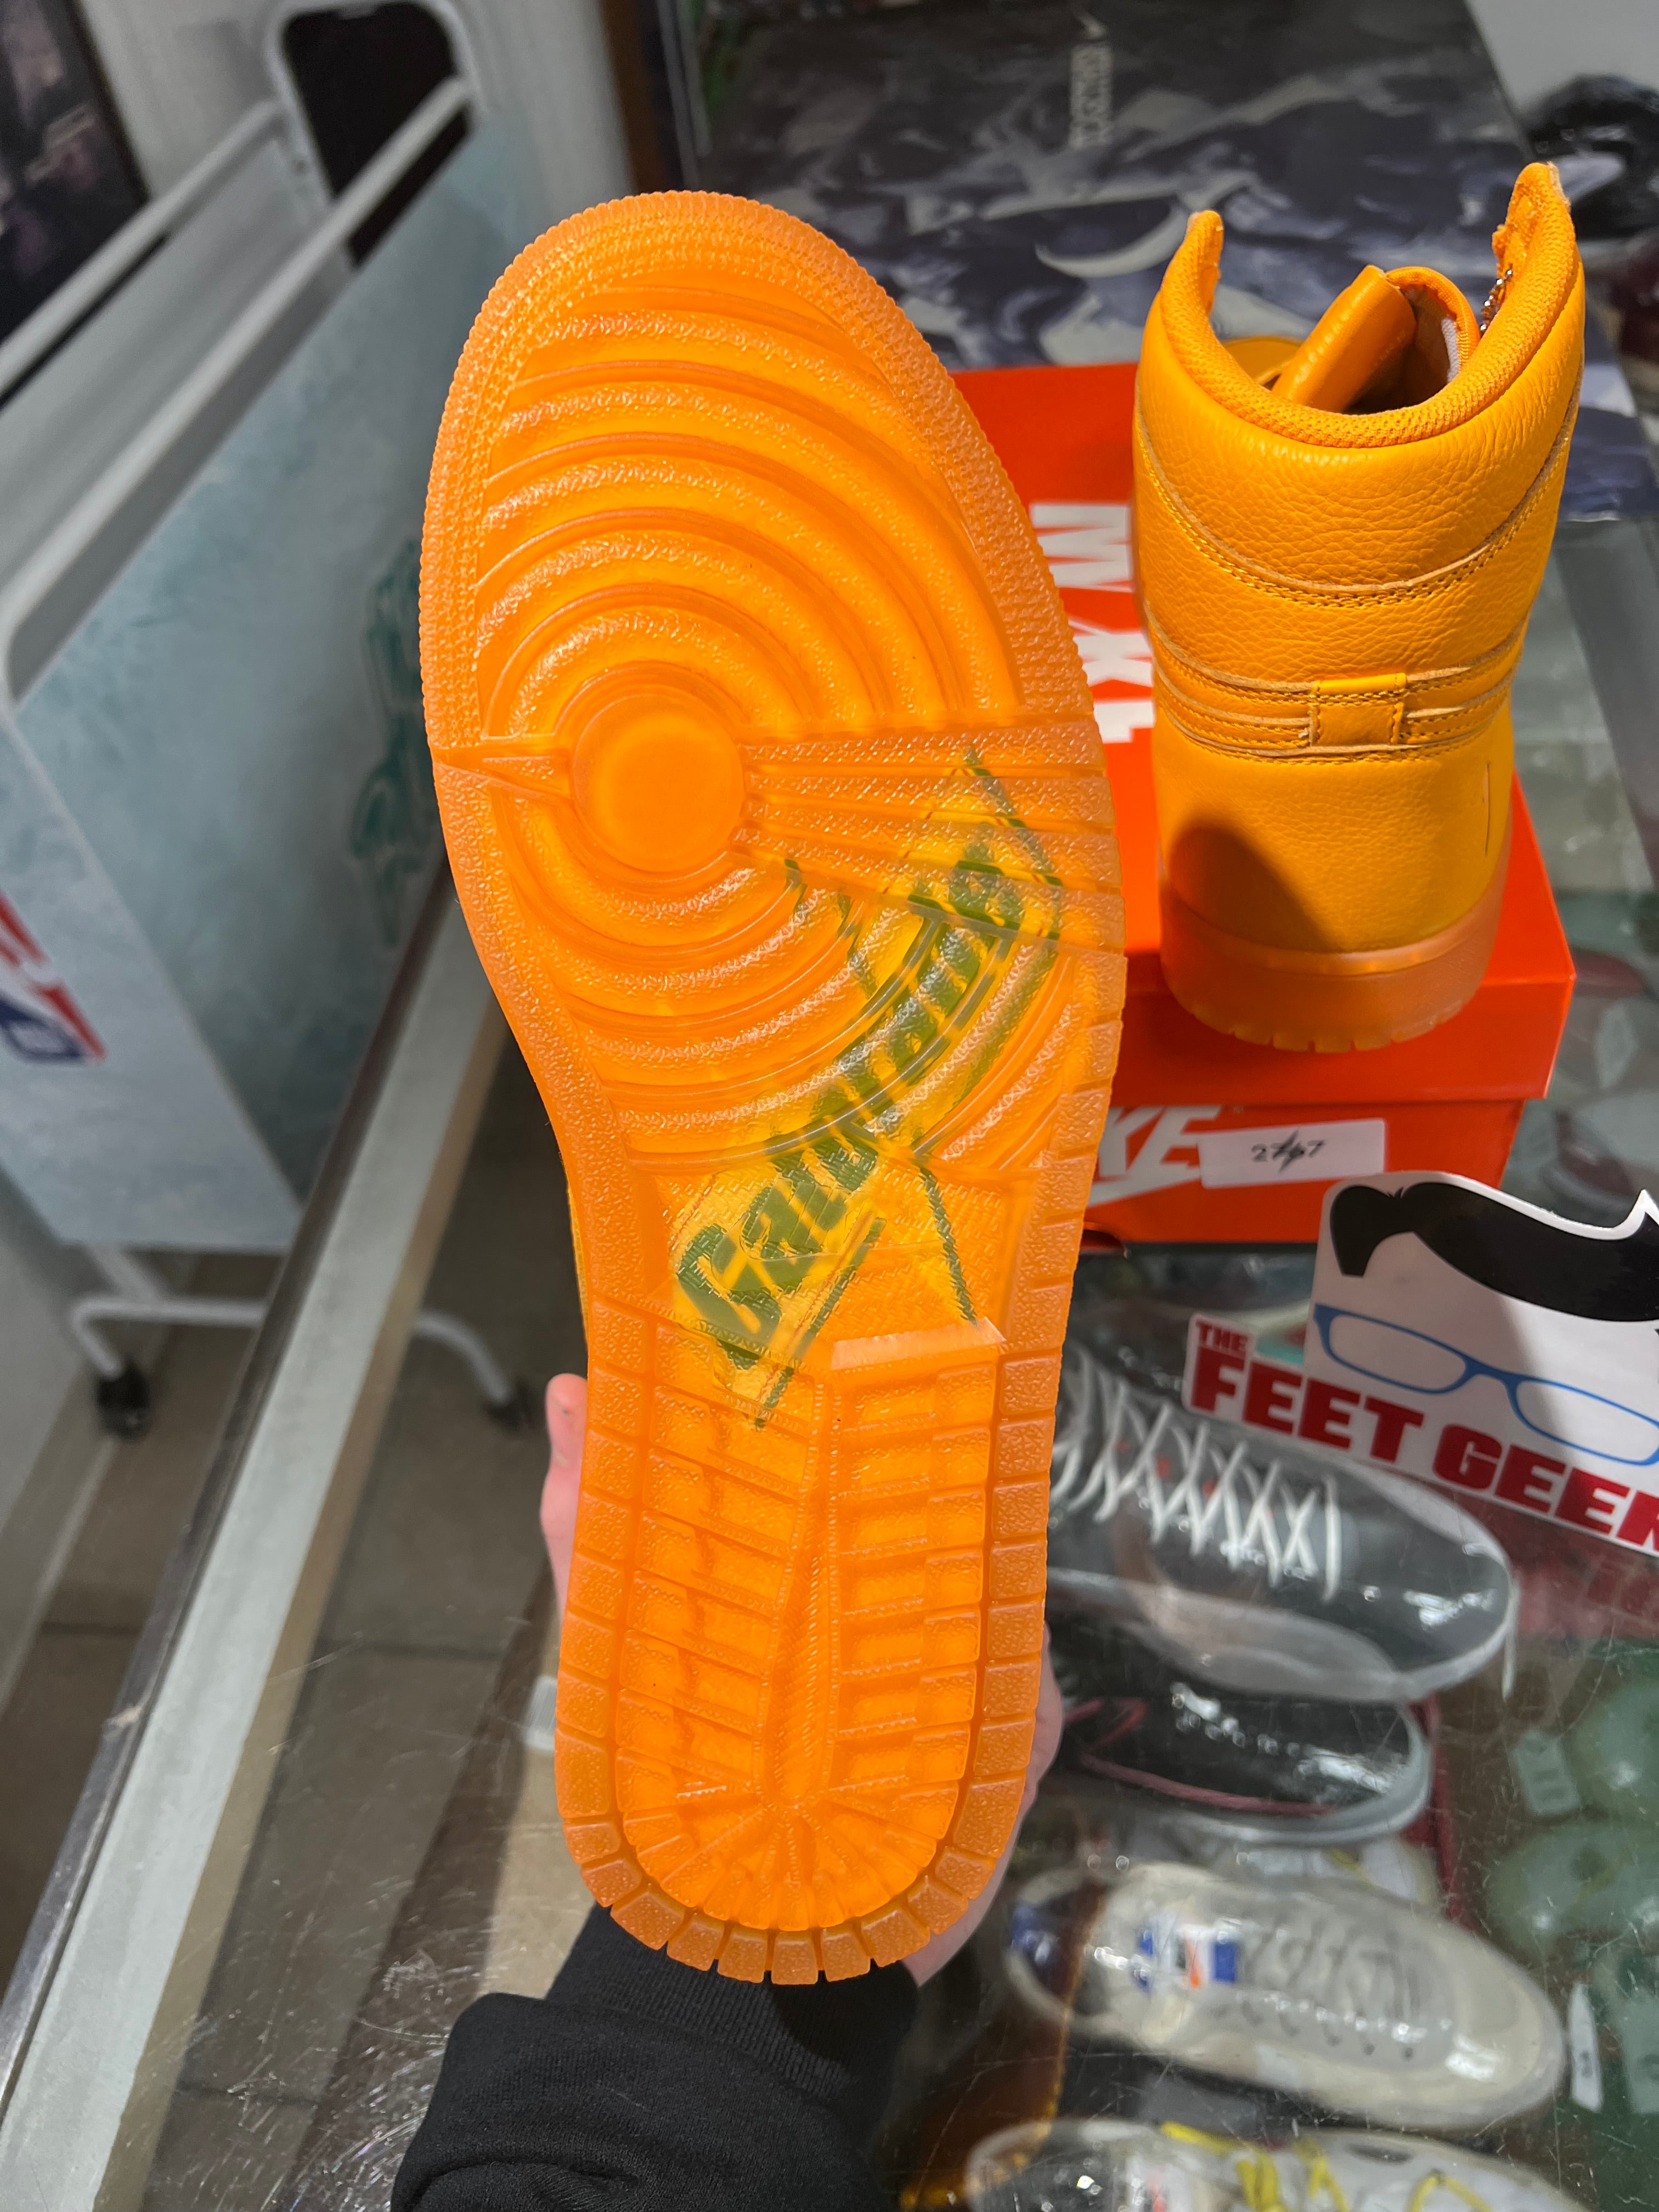 Air Jordan 1 high retro Gatorade orange men’s shoe new